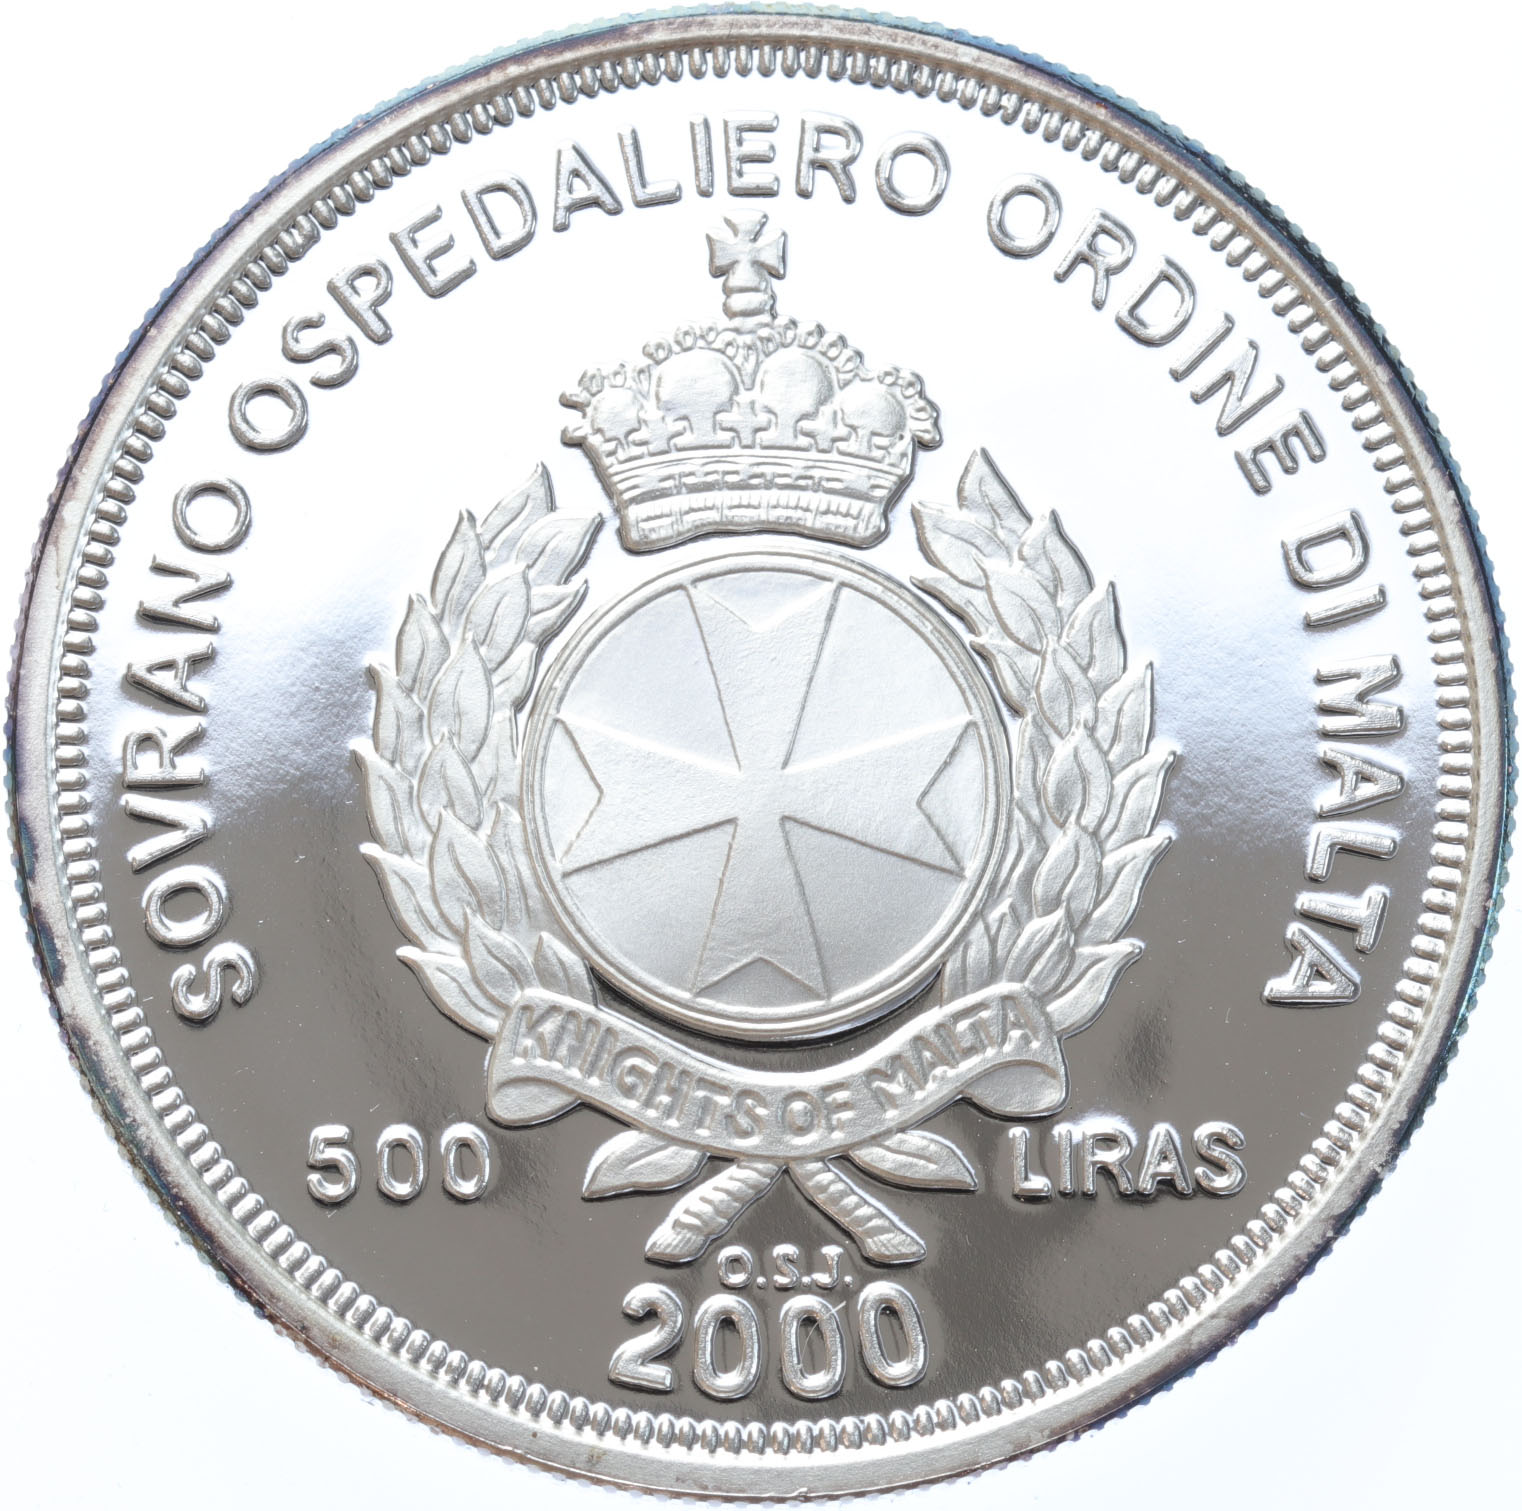 Malta 500 Liras 2000 Zeus silver Proof